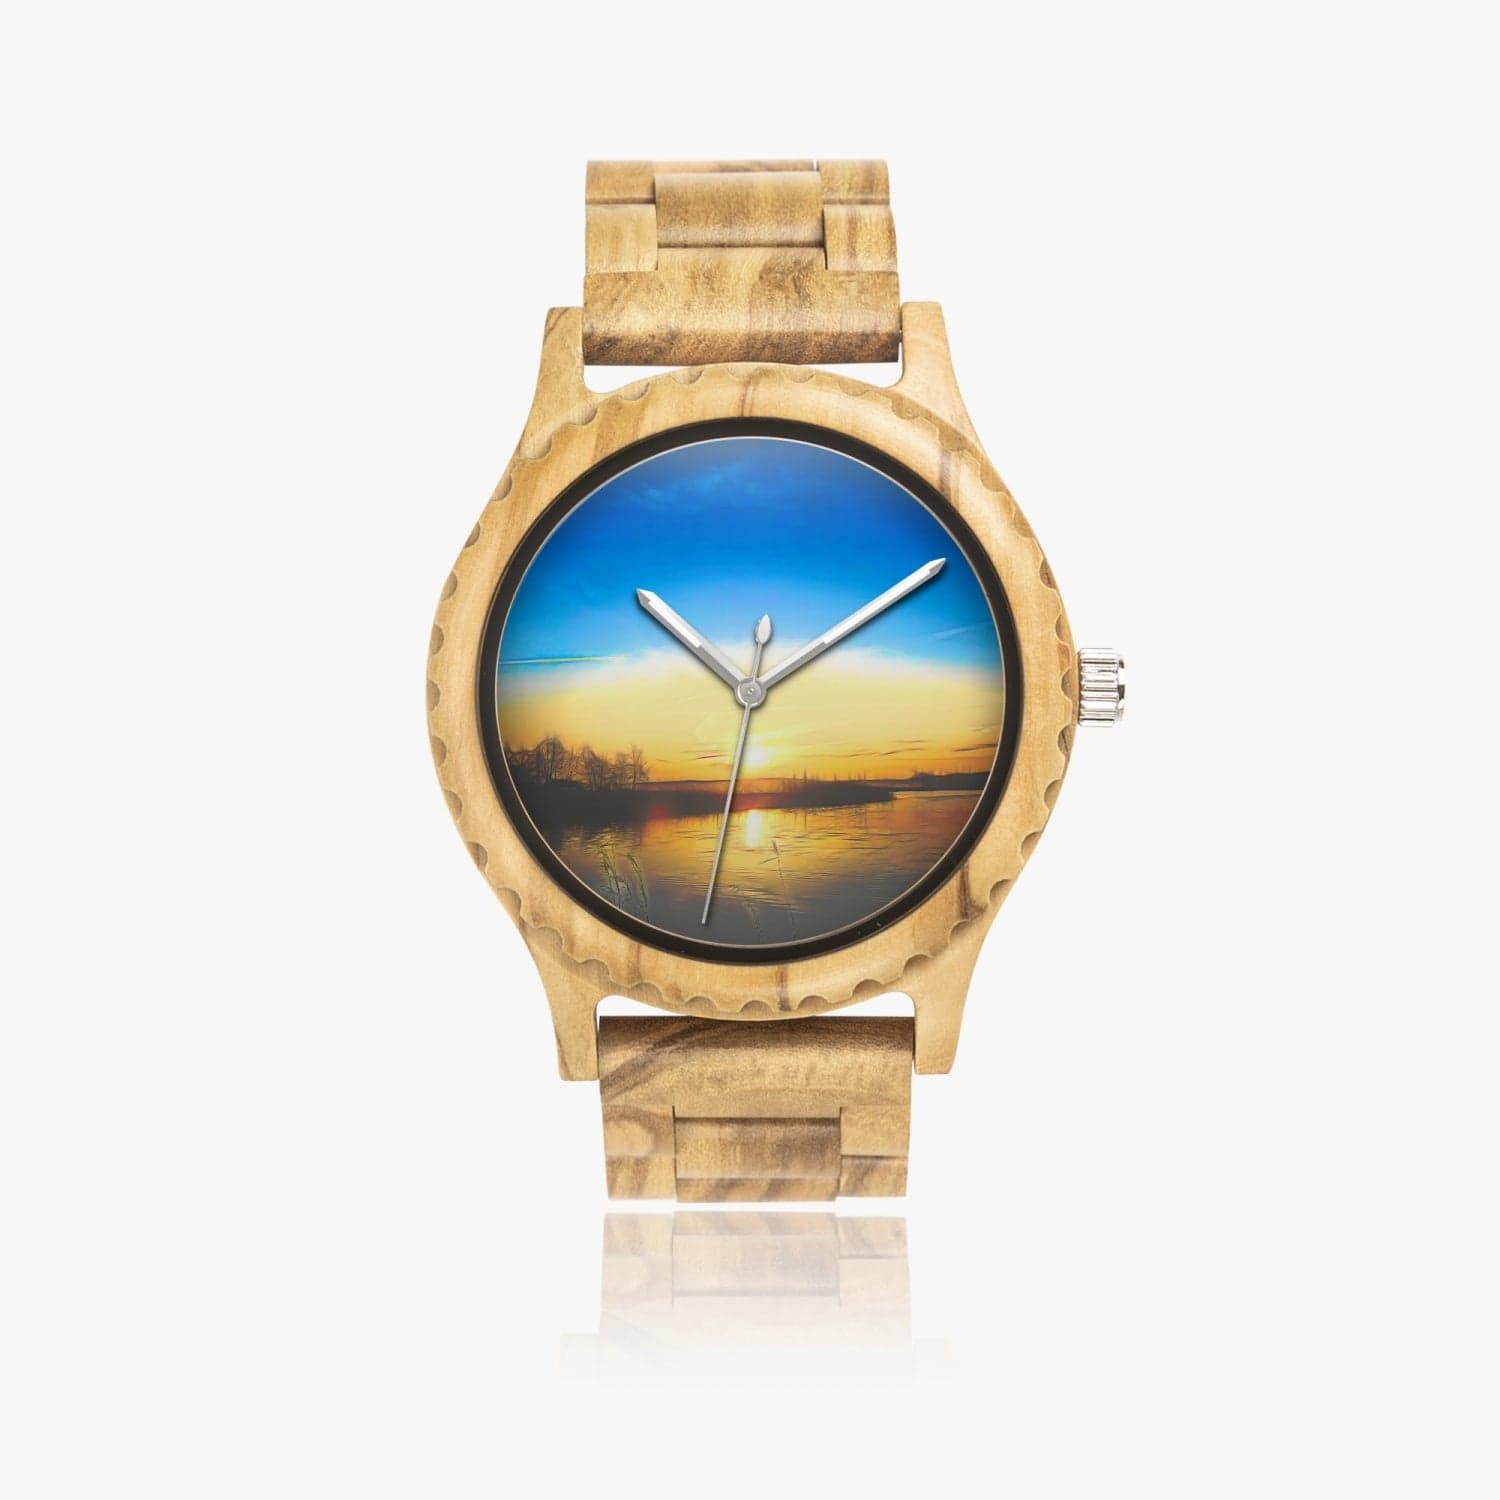 Time to get up! Italian Olive Lumber Wooden Watch. Designer watch by Sensus Studio Design